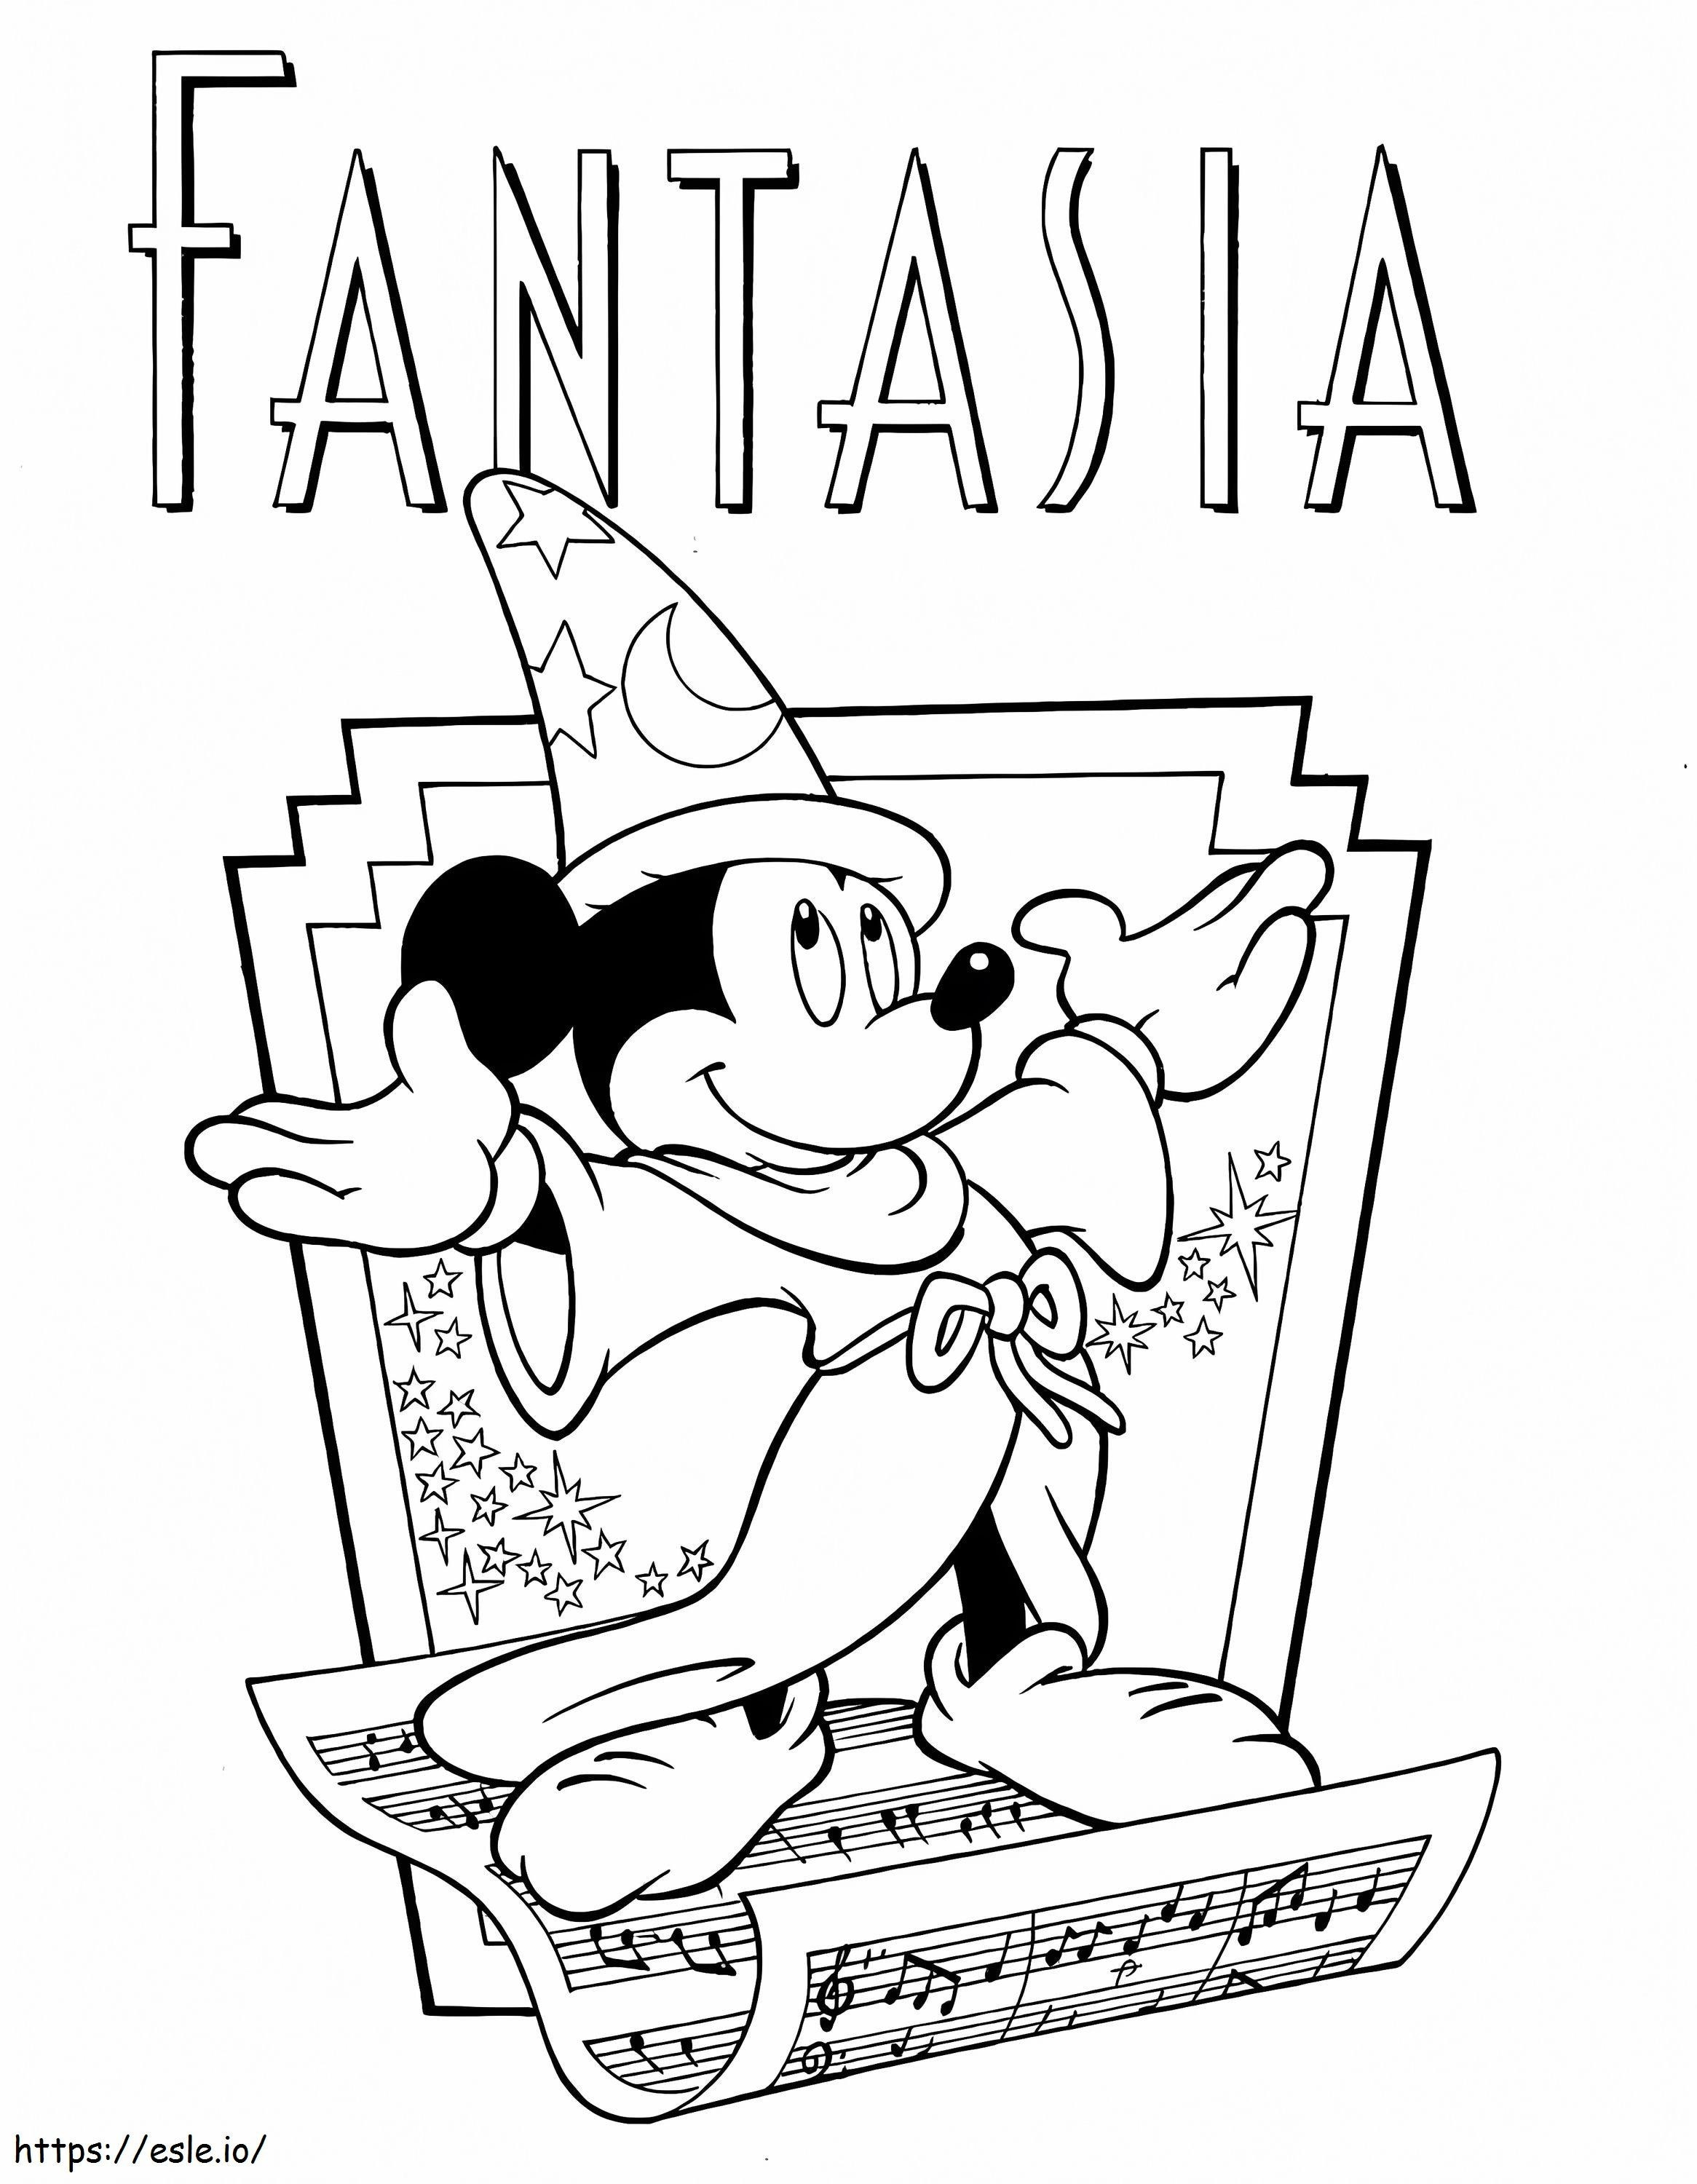 Disney Fantasia de colorat